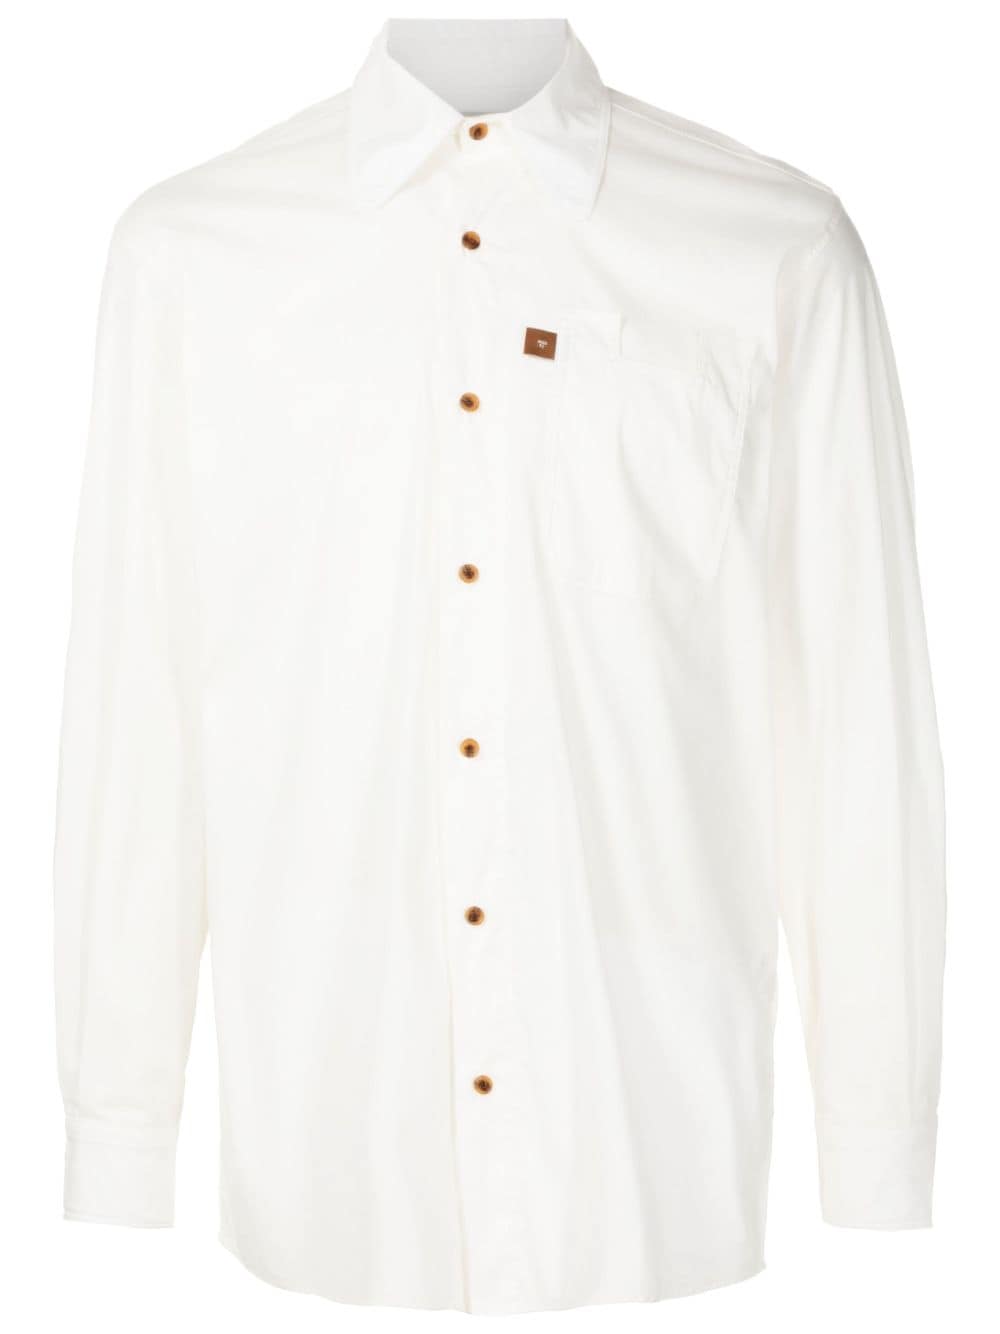 MISCI long-sleeved button-up shirt - White von MISCI